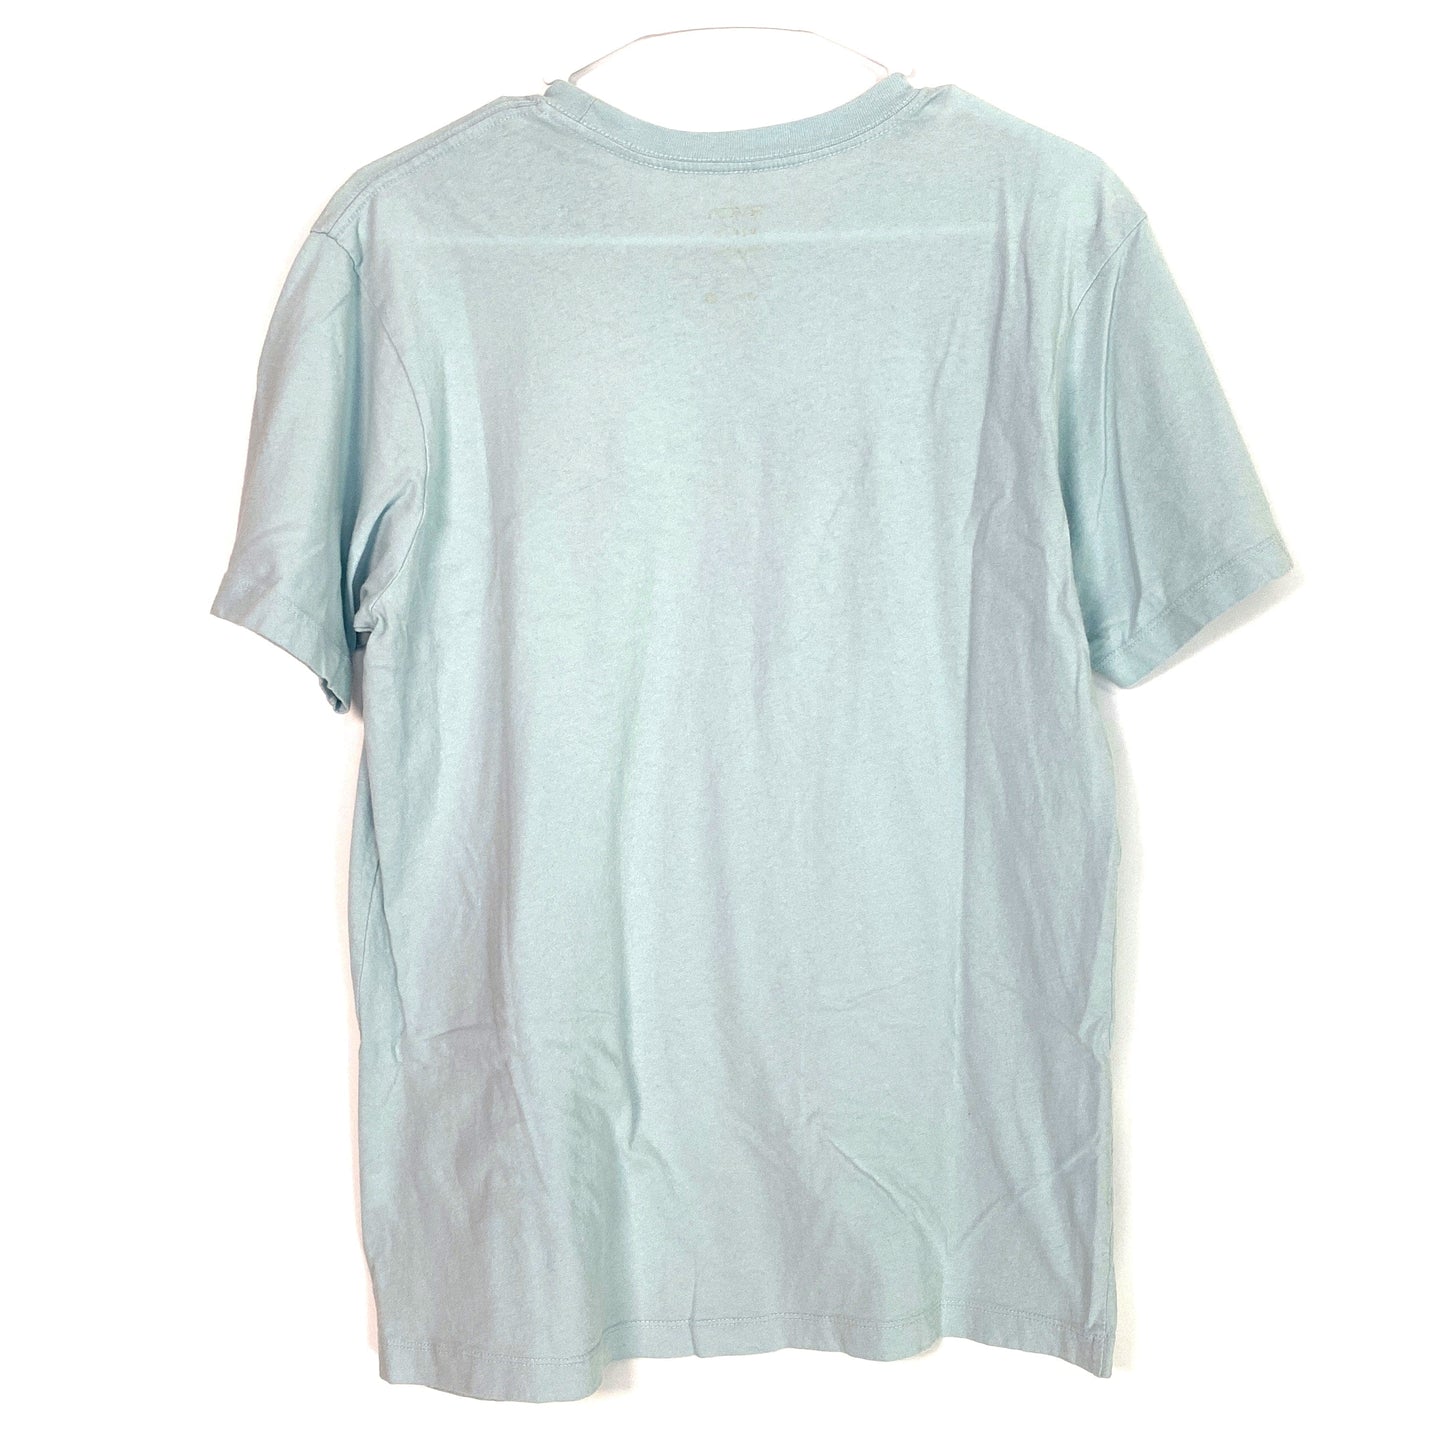 Trendy RVCA Mens Light Blue Graphic Print T-Shirt M